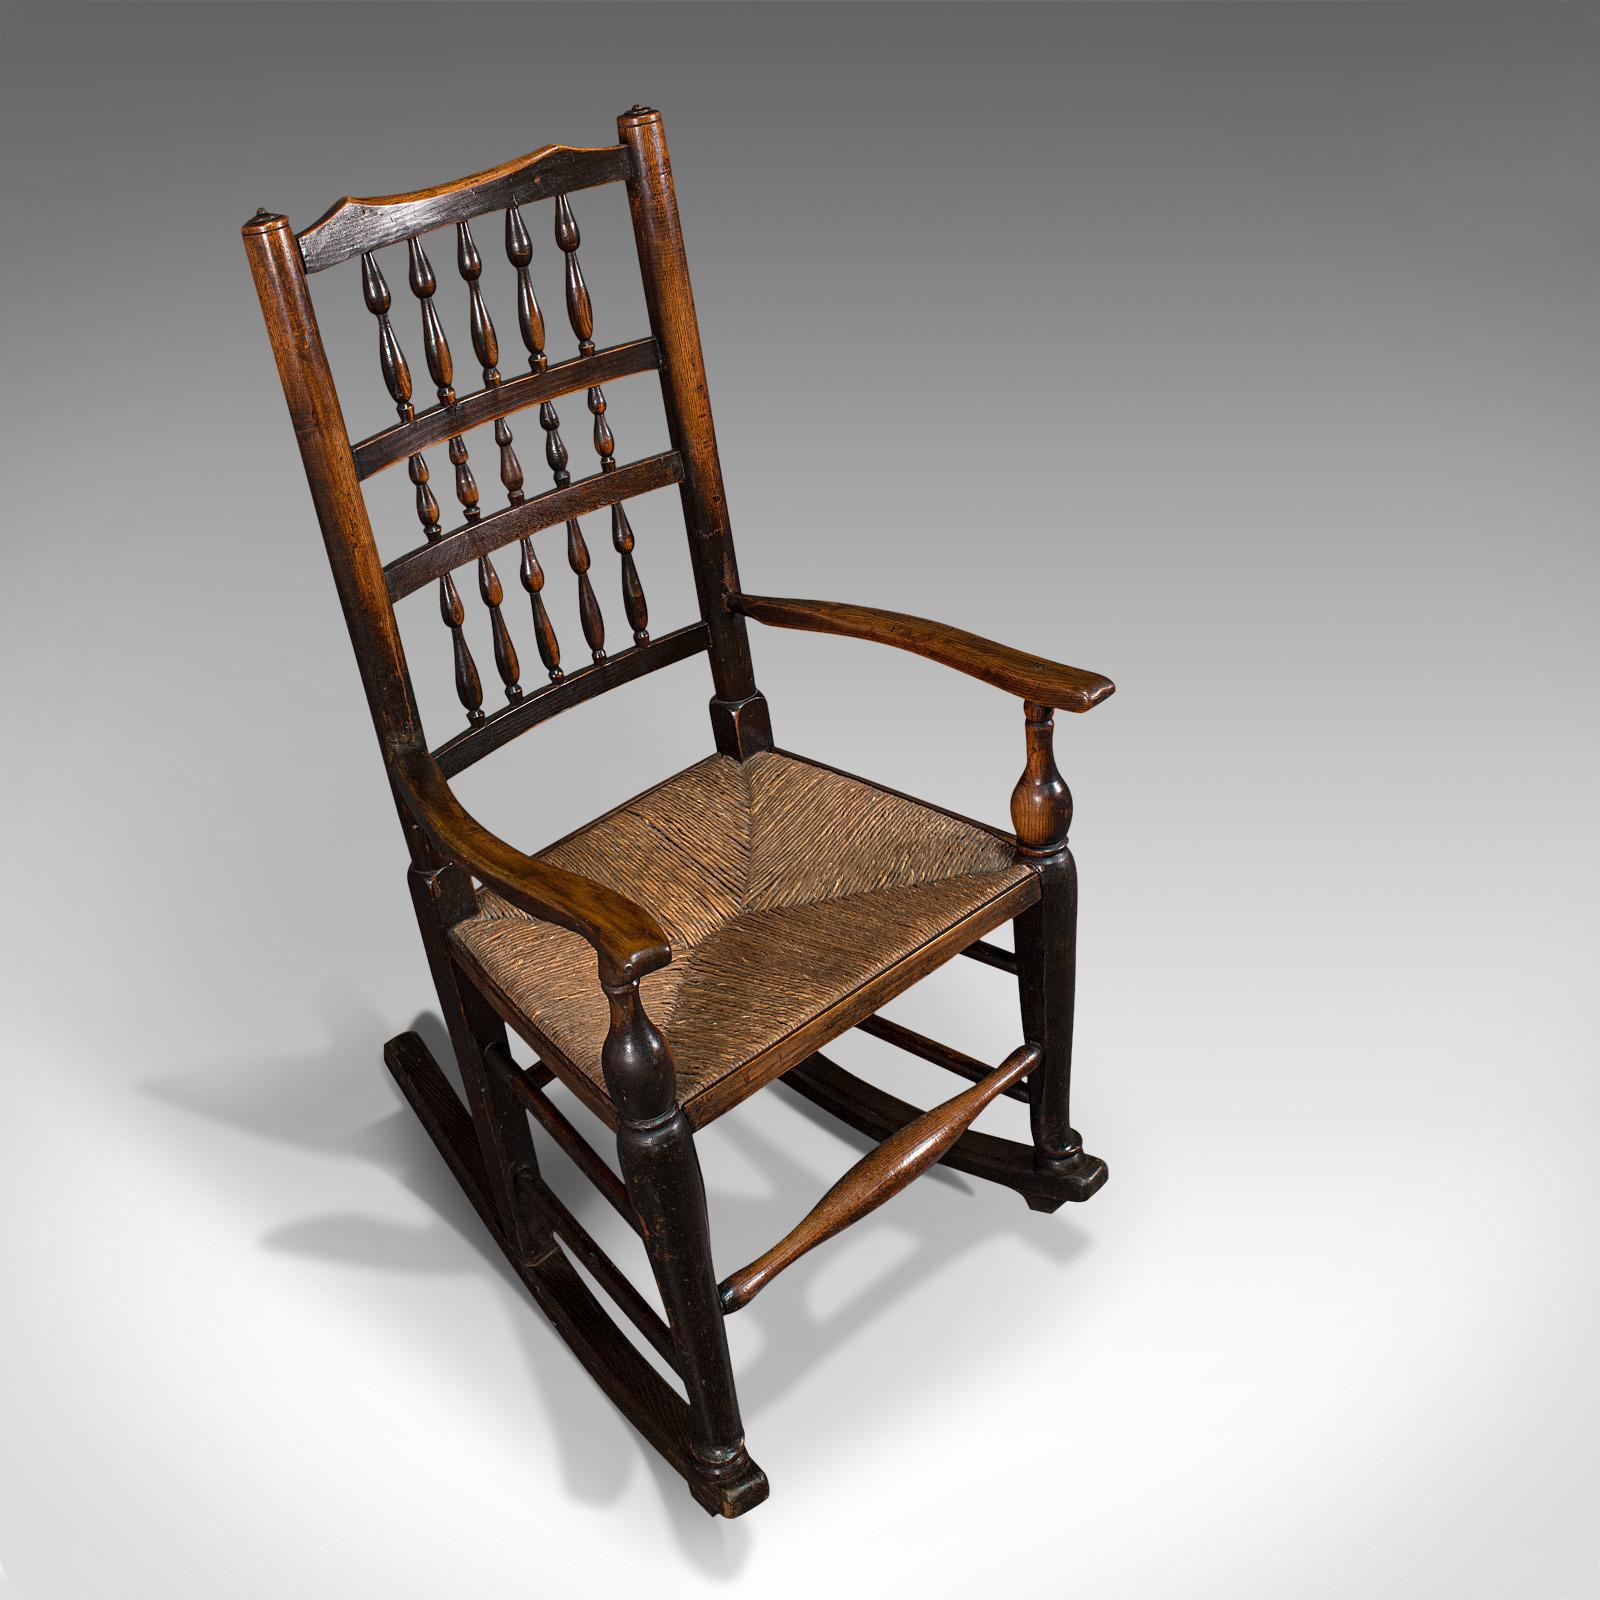 18th Century Antique Lancashire Rocking Chair, English, Ash, Spindle Back, Seat, Georgian